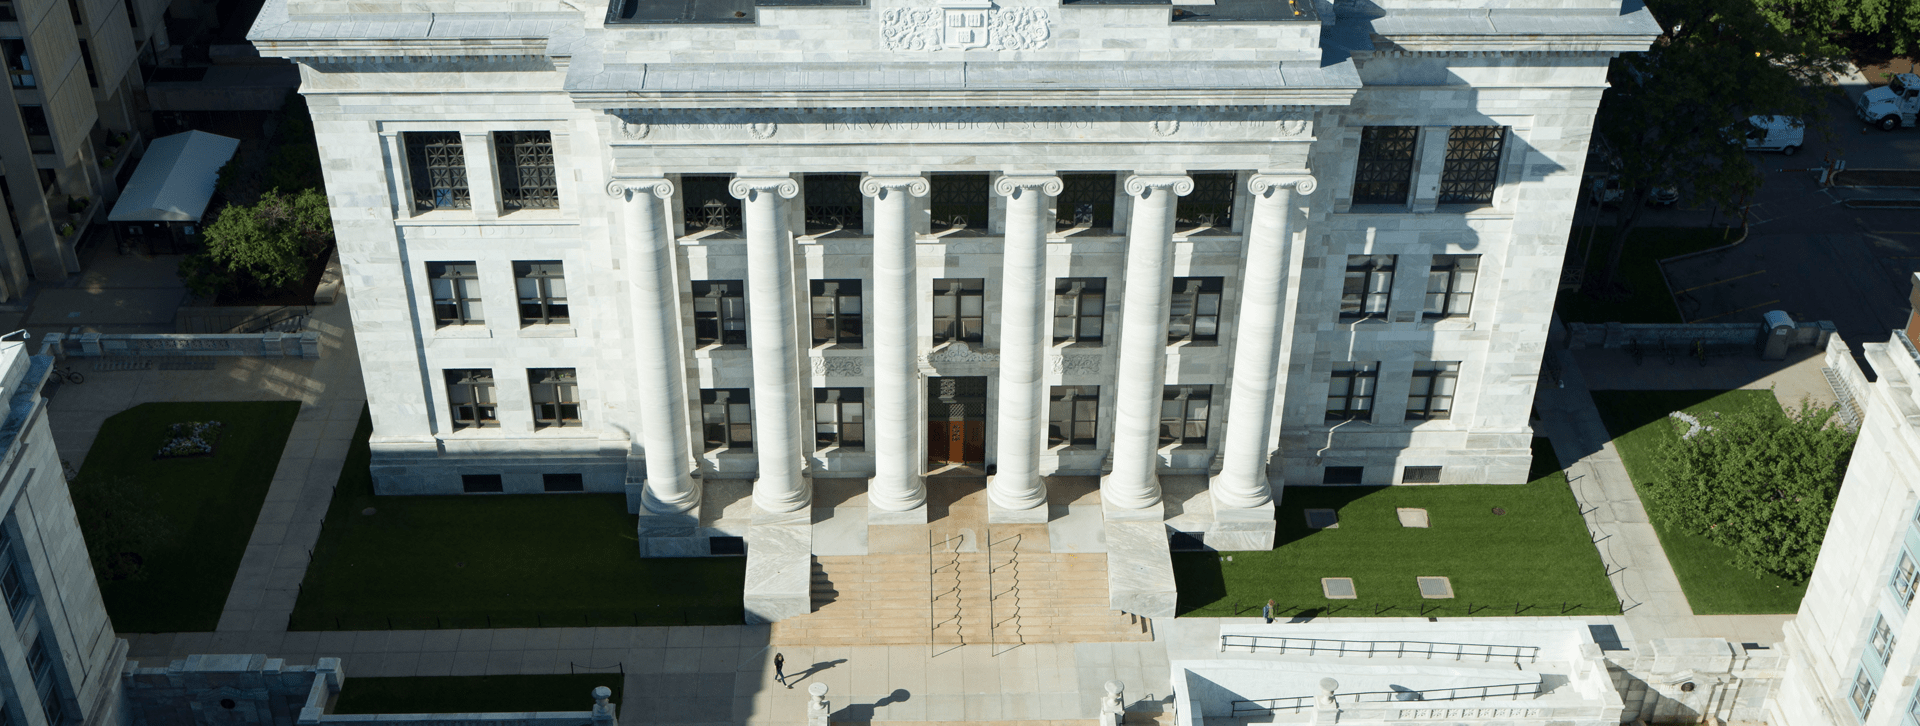 Aerial view of Gordon Hall at Harvard Medical School